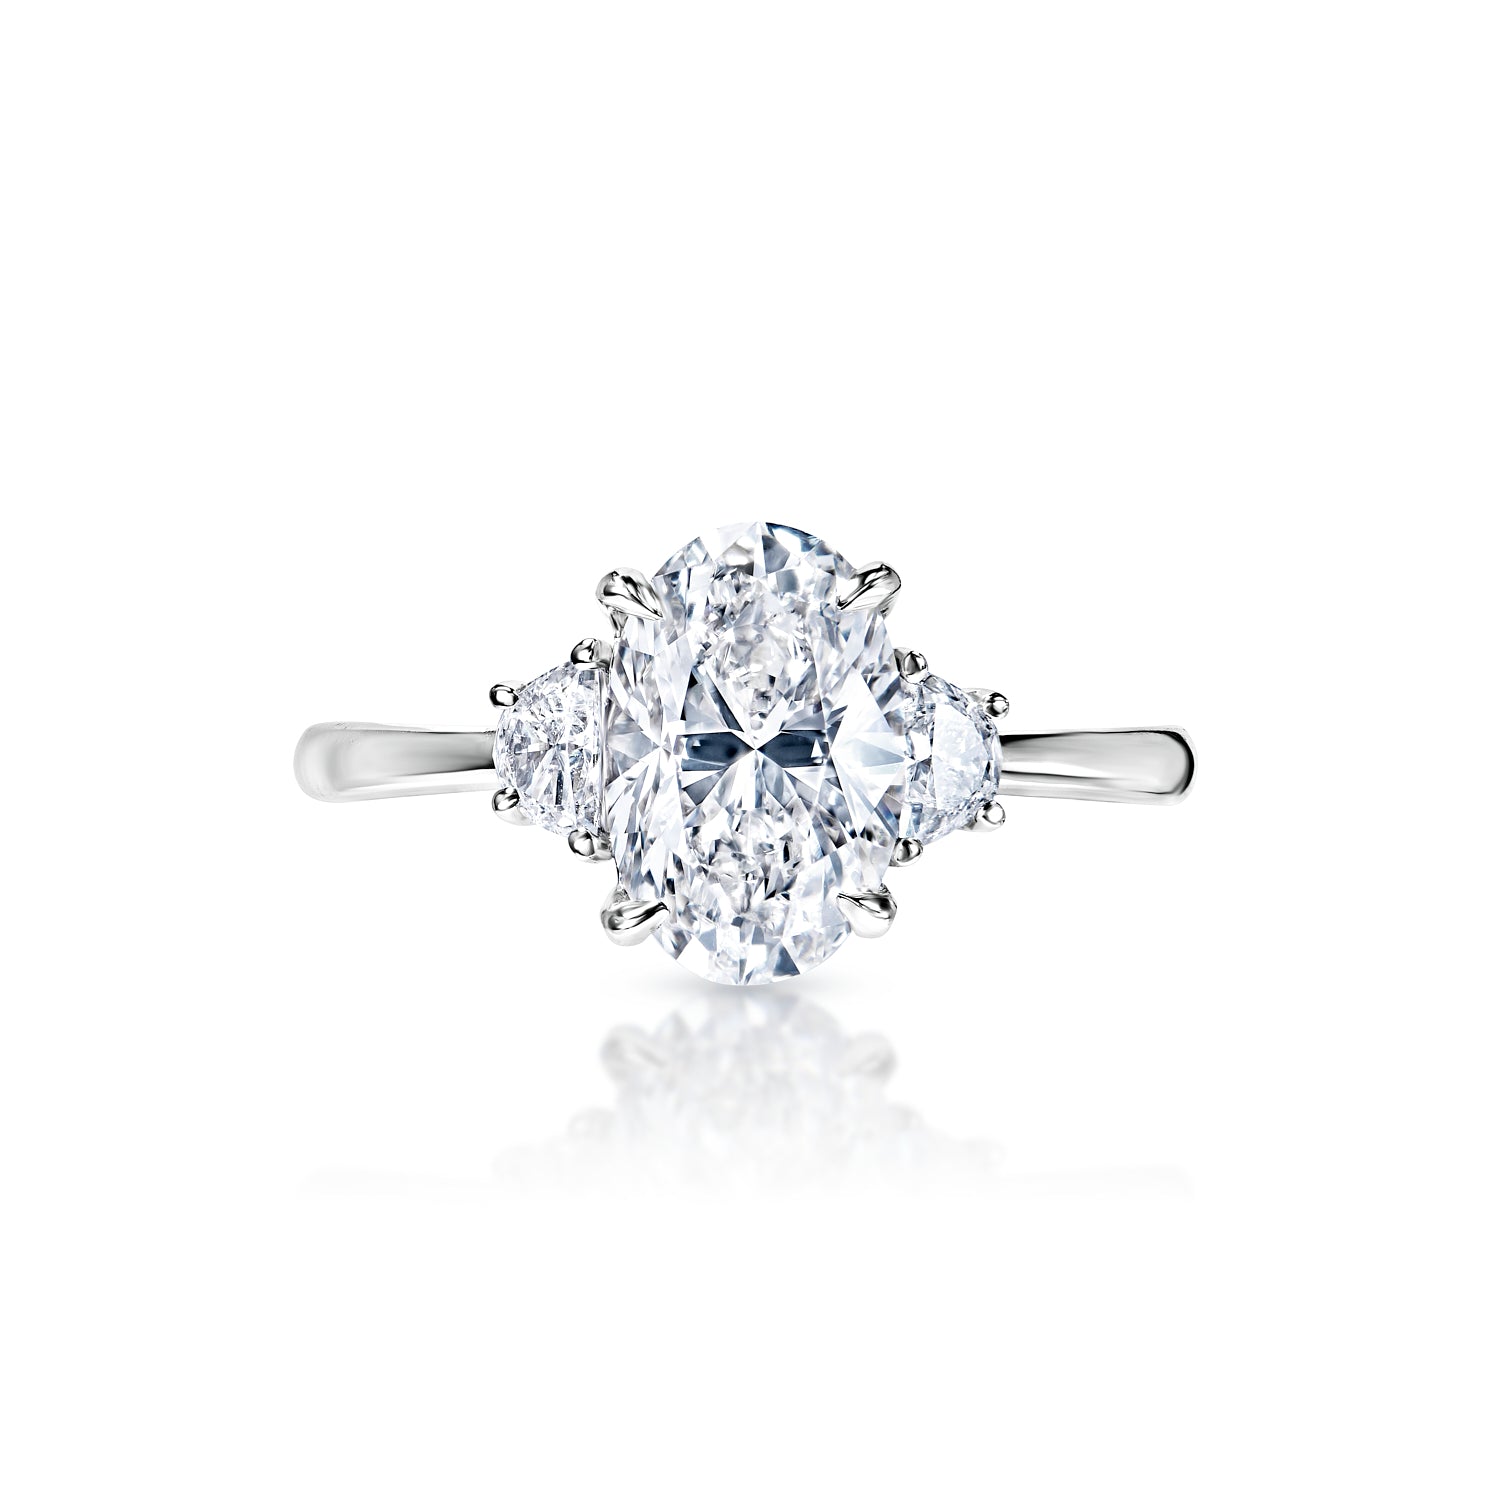 Mckenna 2 Carat G VVS1 Oval Cut Diamond Half Moon Three Stone Engagement Ring in Platinum Front View